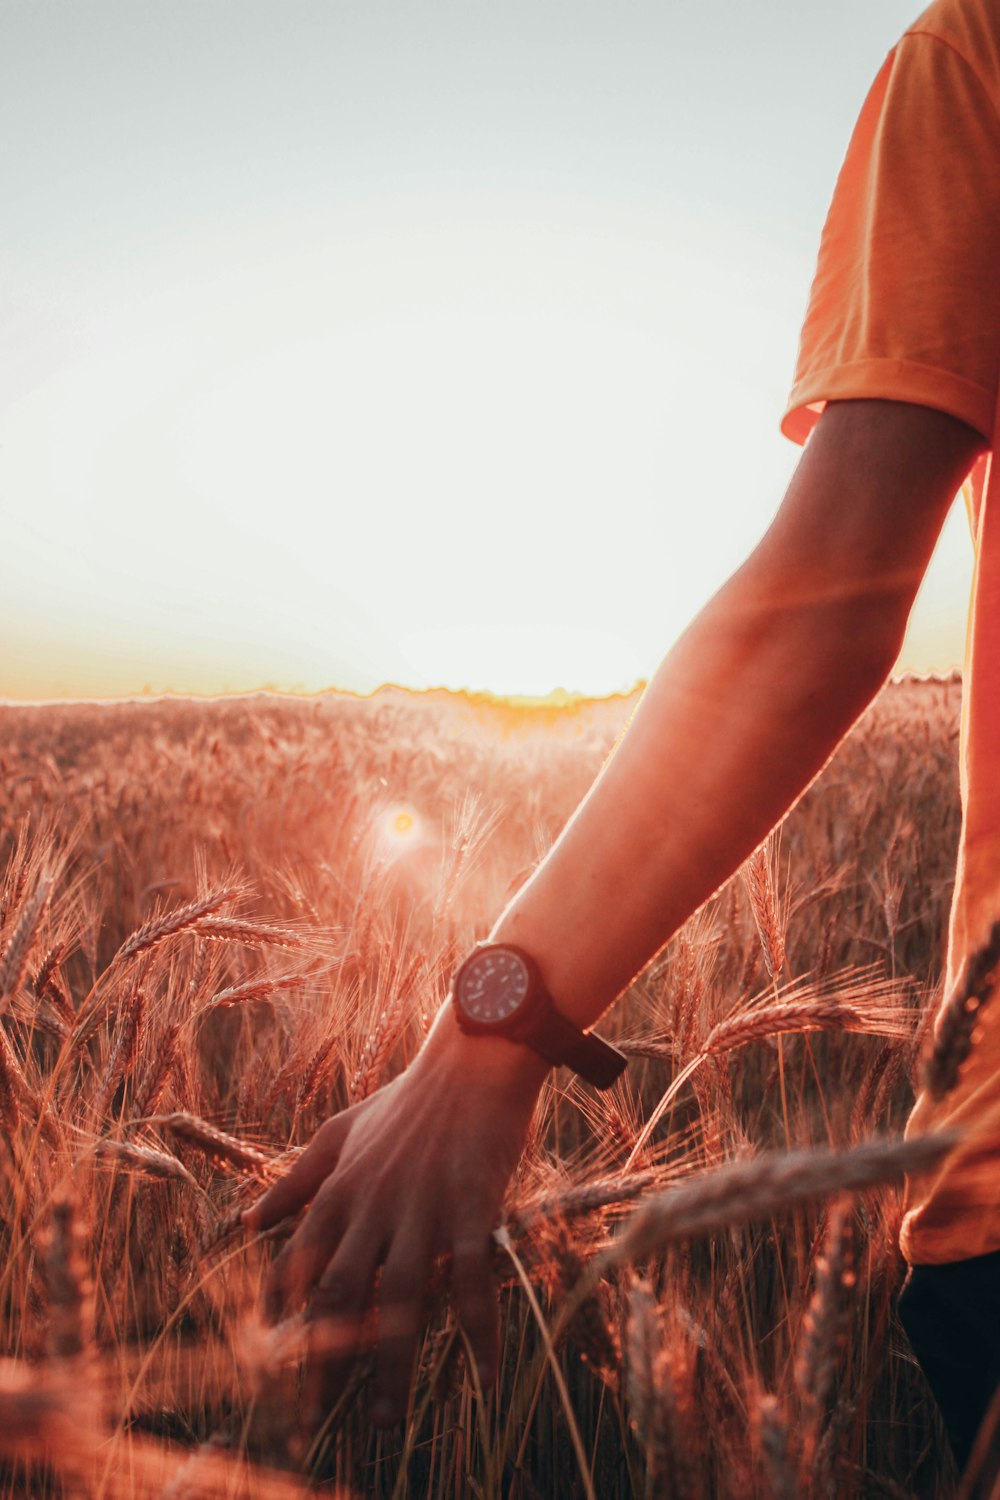 person in orange t-shirt wearing black watch standing on brown grass field during daytime